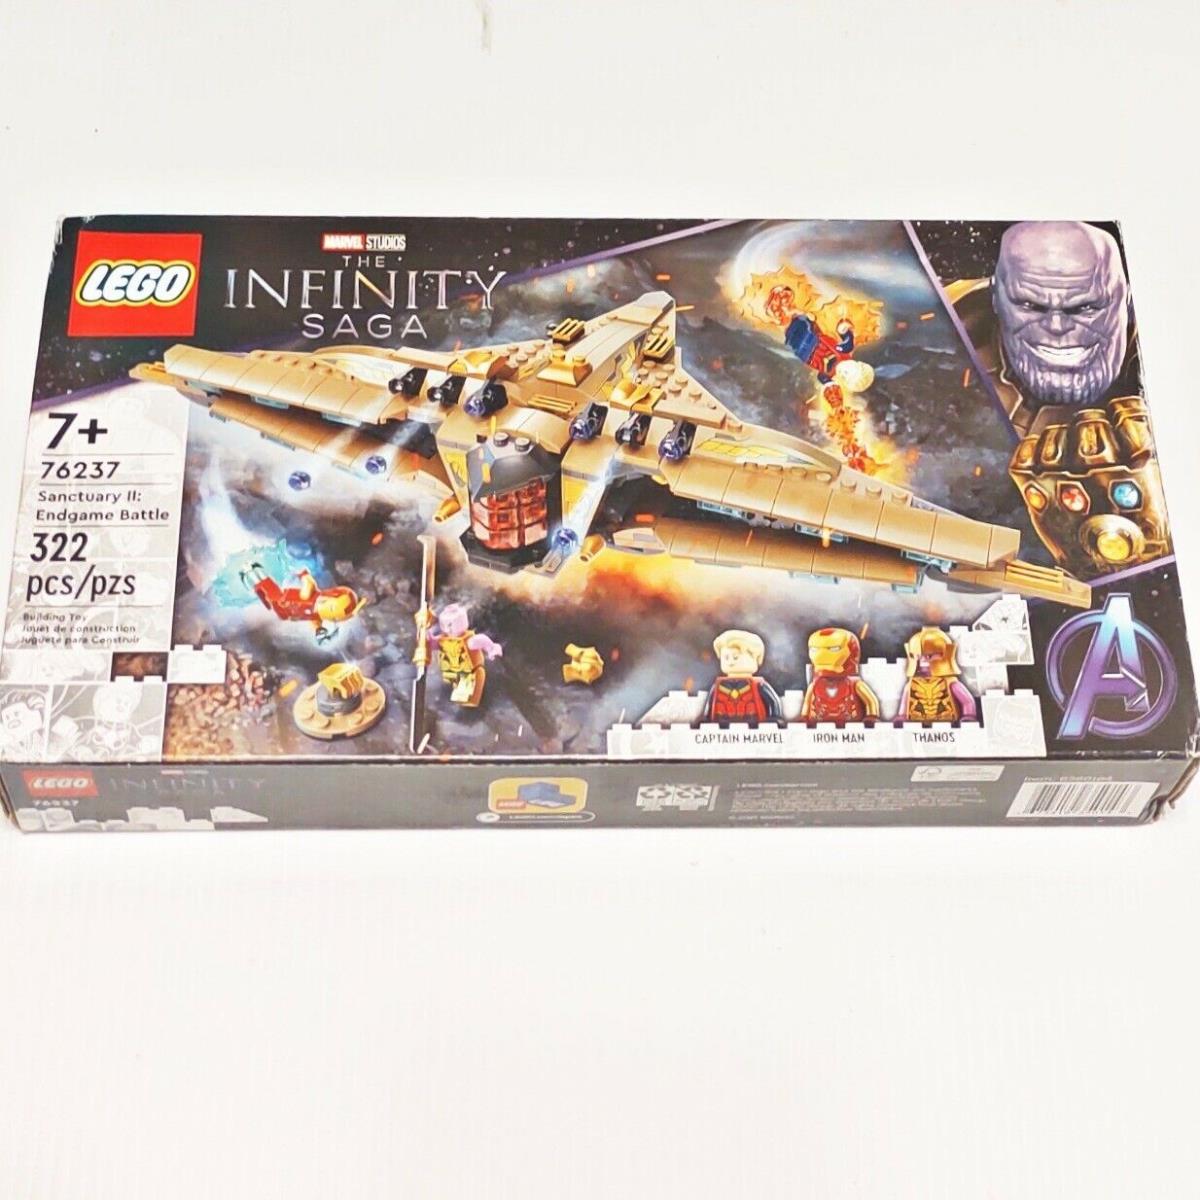 Lego Marvel The Infinity Saga 76237 Sanctuary II Endgame Battle